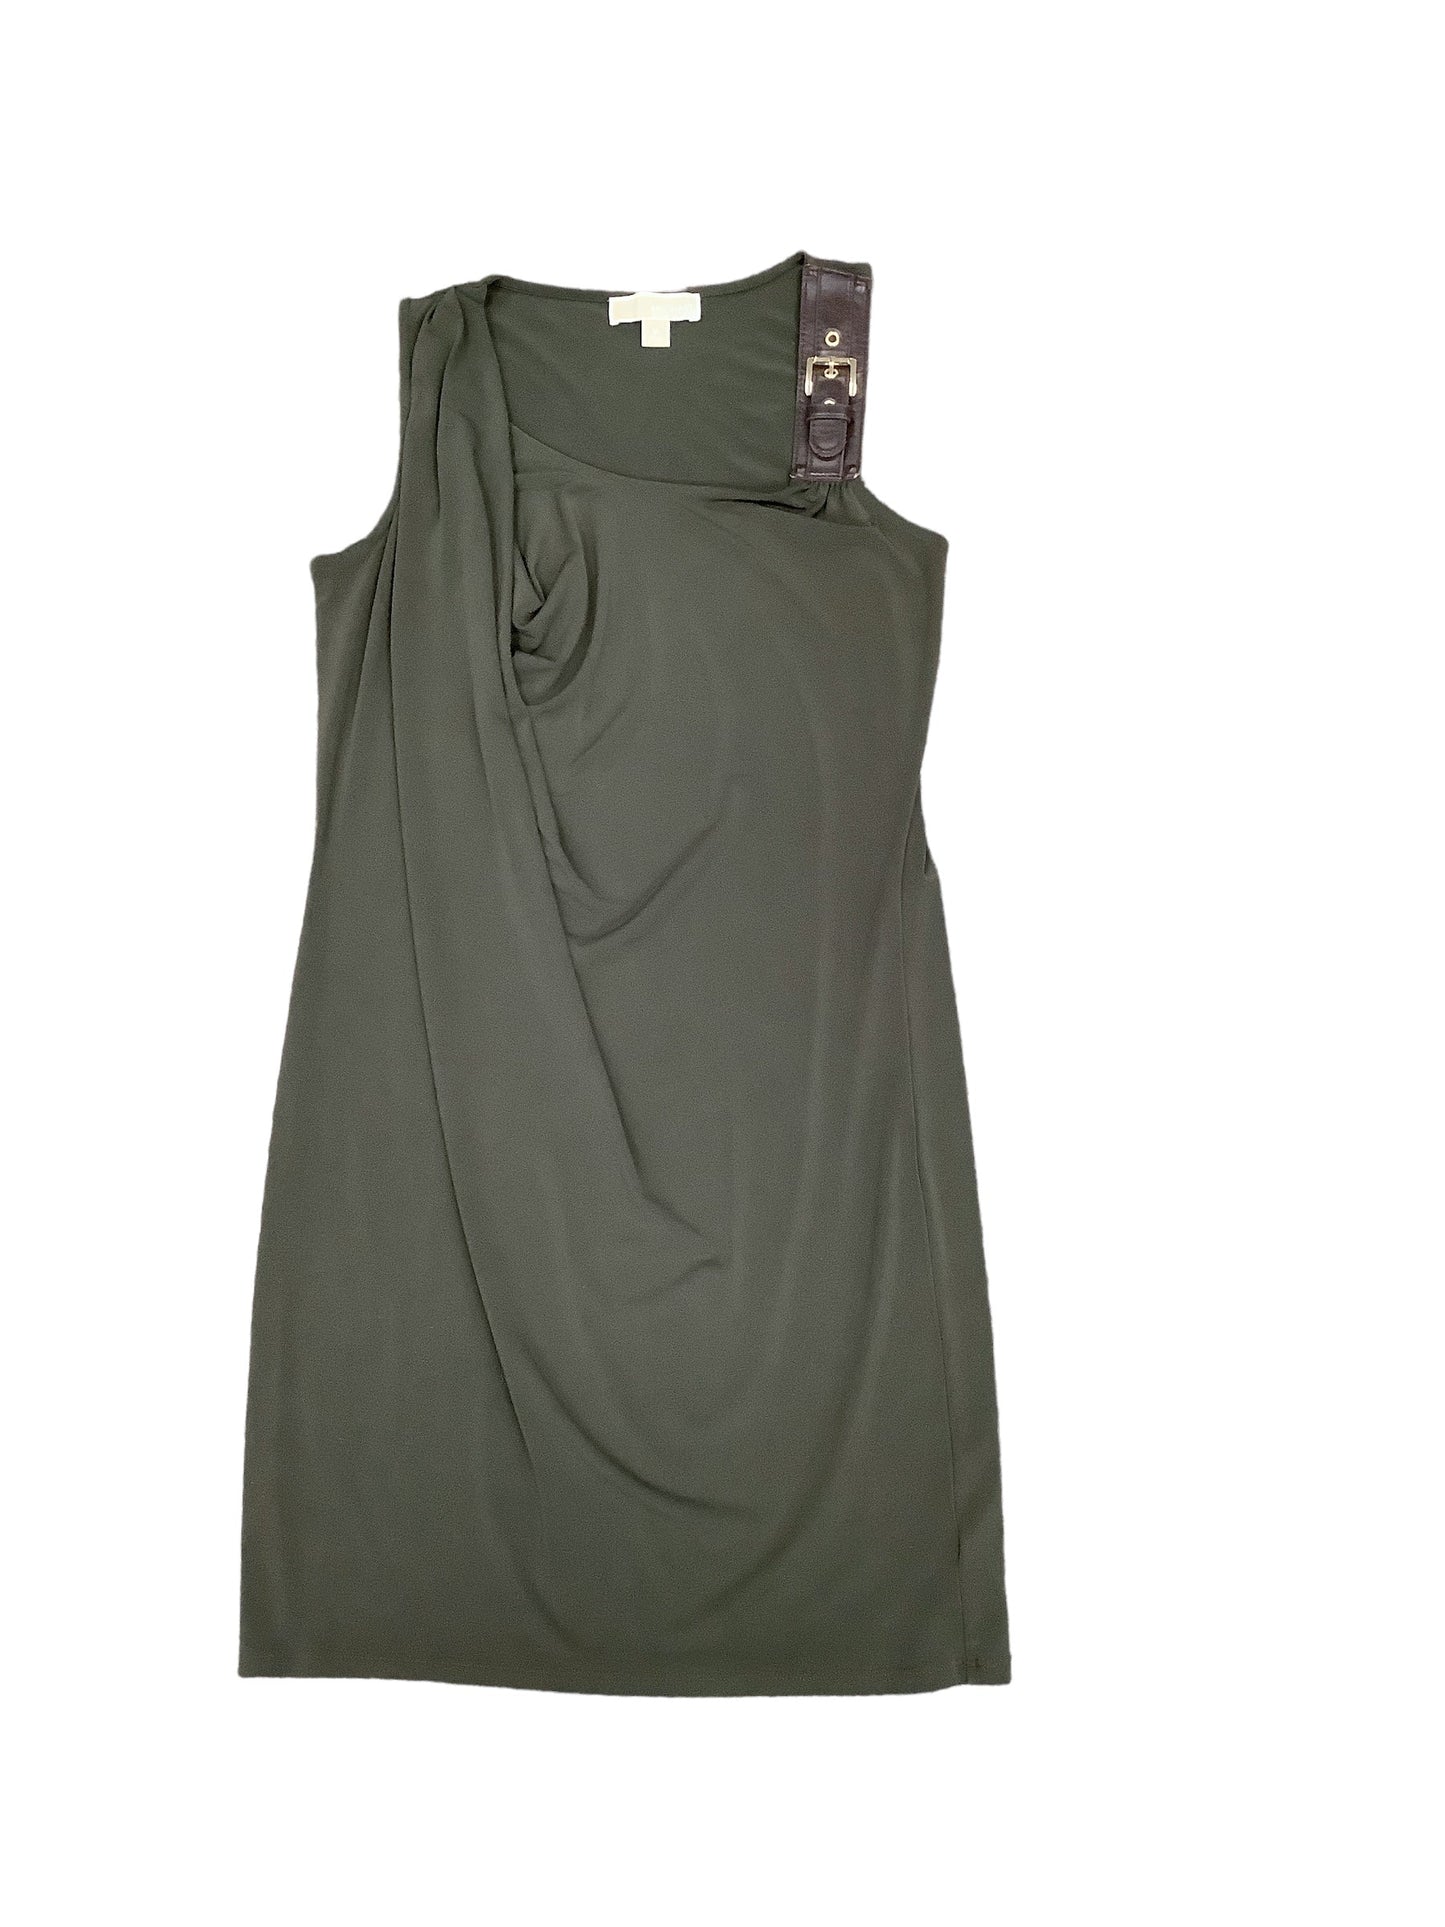 Green Dress Designer Michael By Michael Kors, Size M